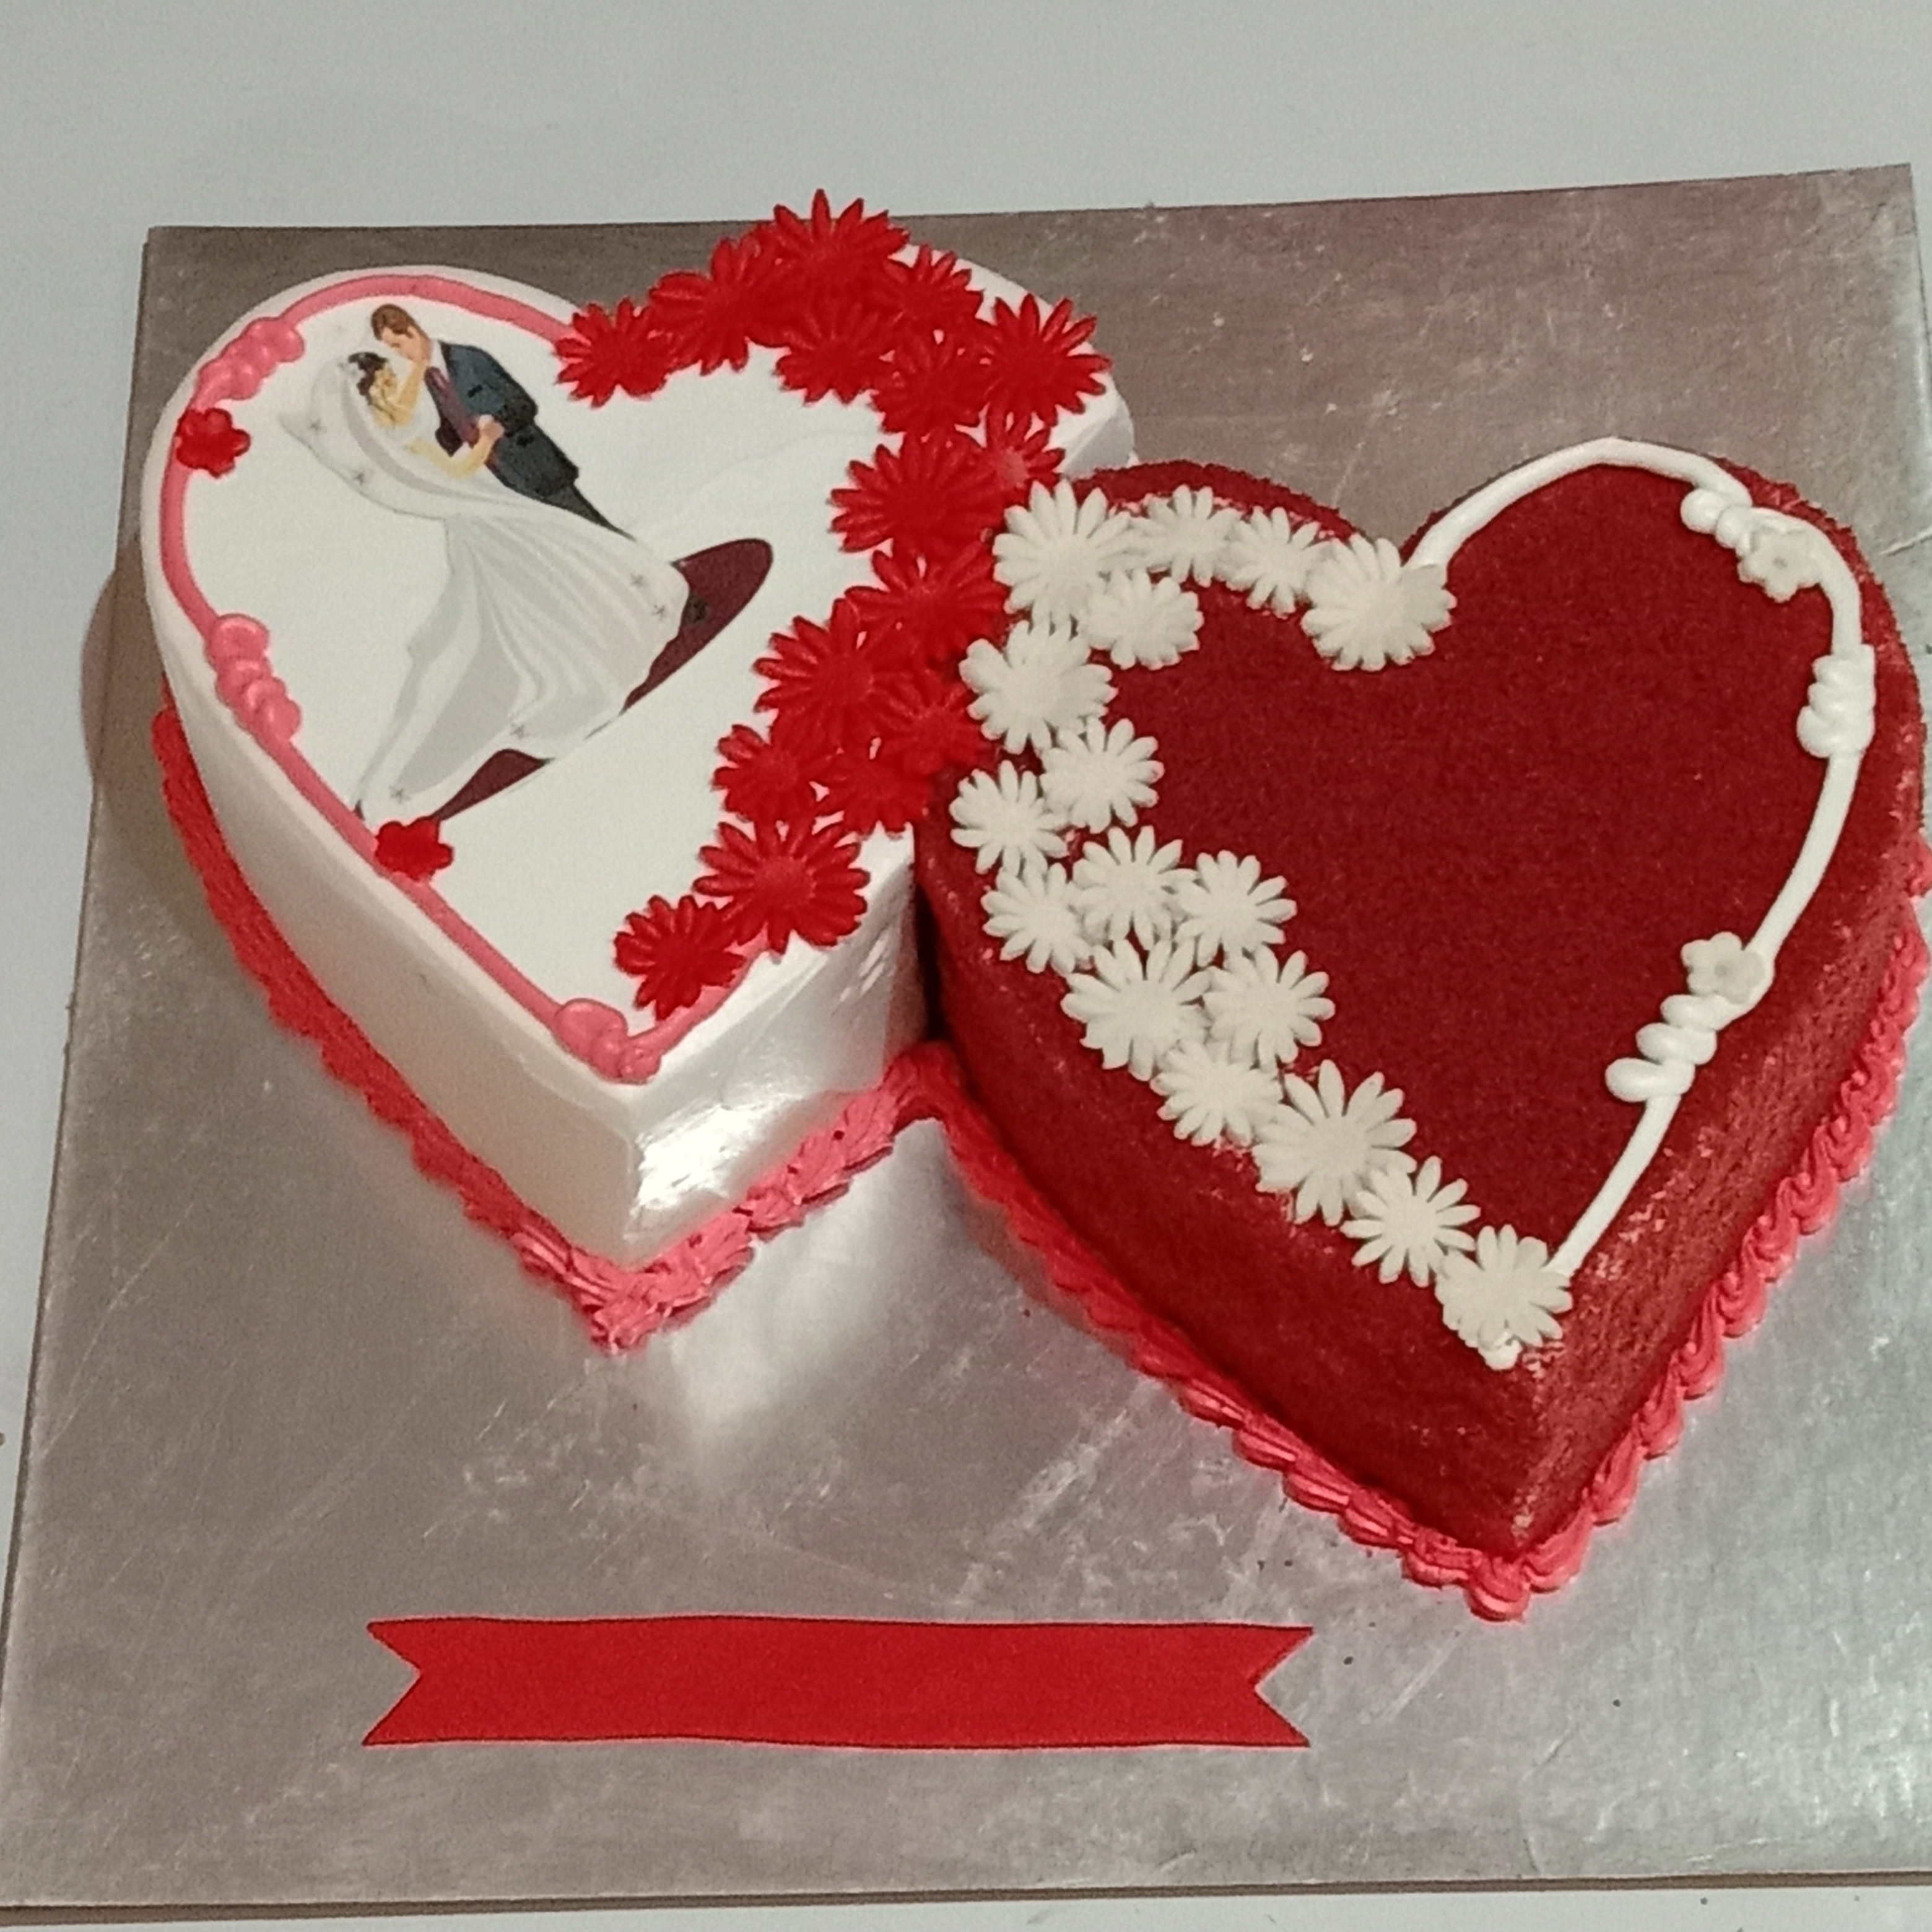 WE 11 Cakes in Dubai | Marriage Anniversary Cake Shop